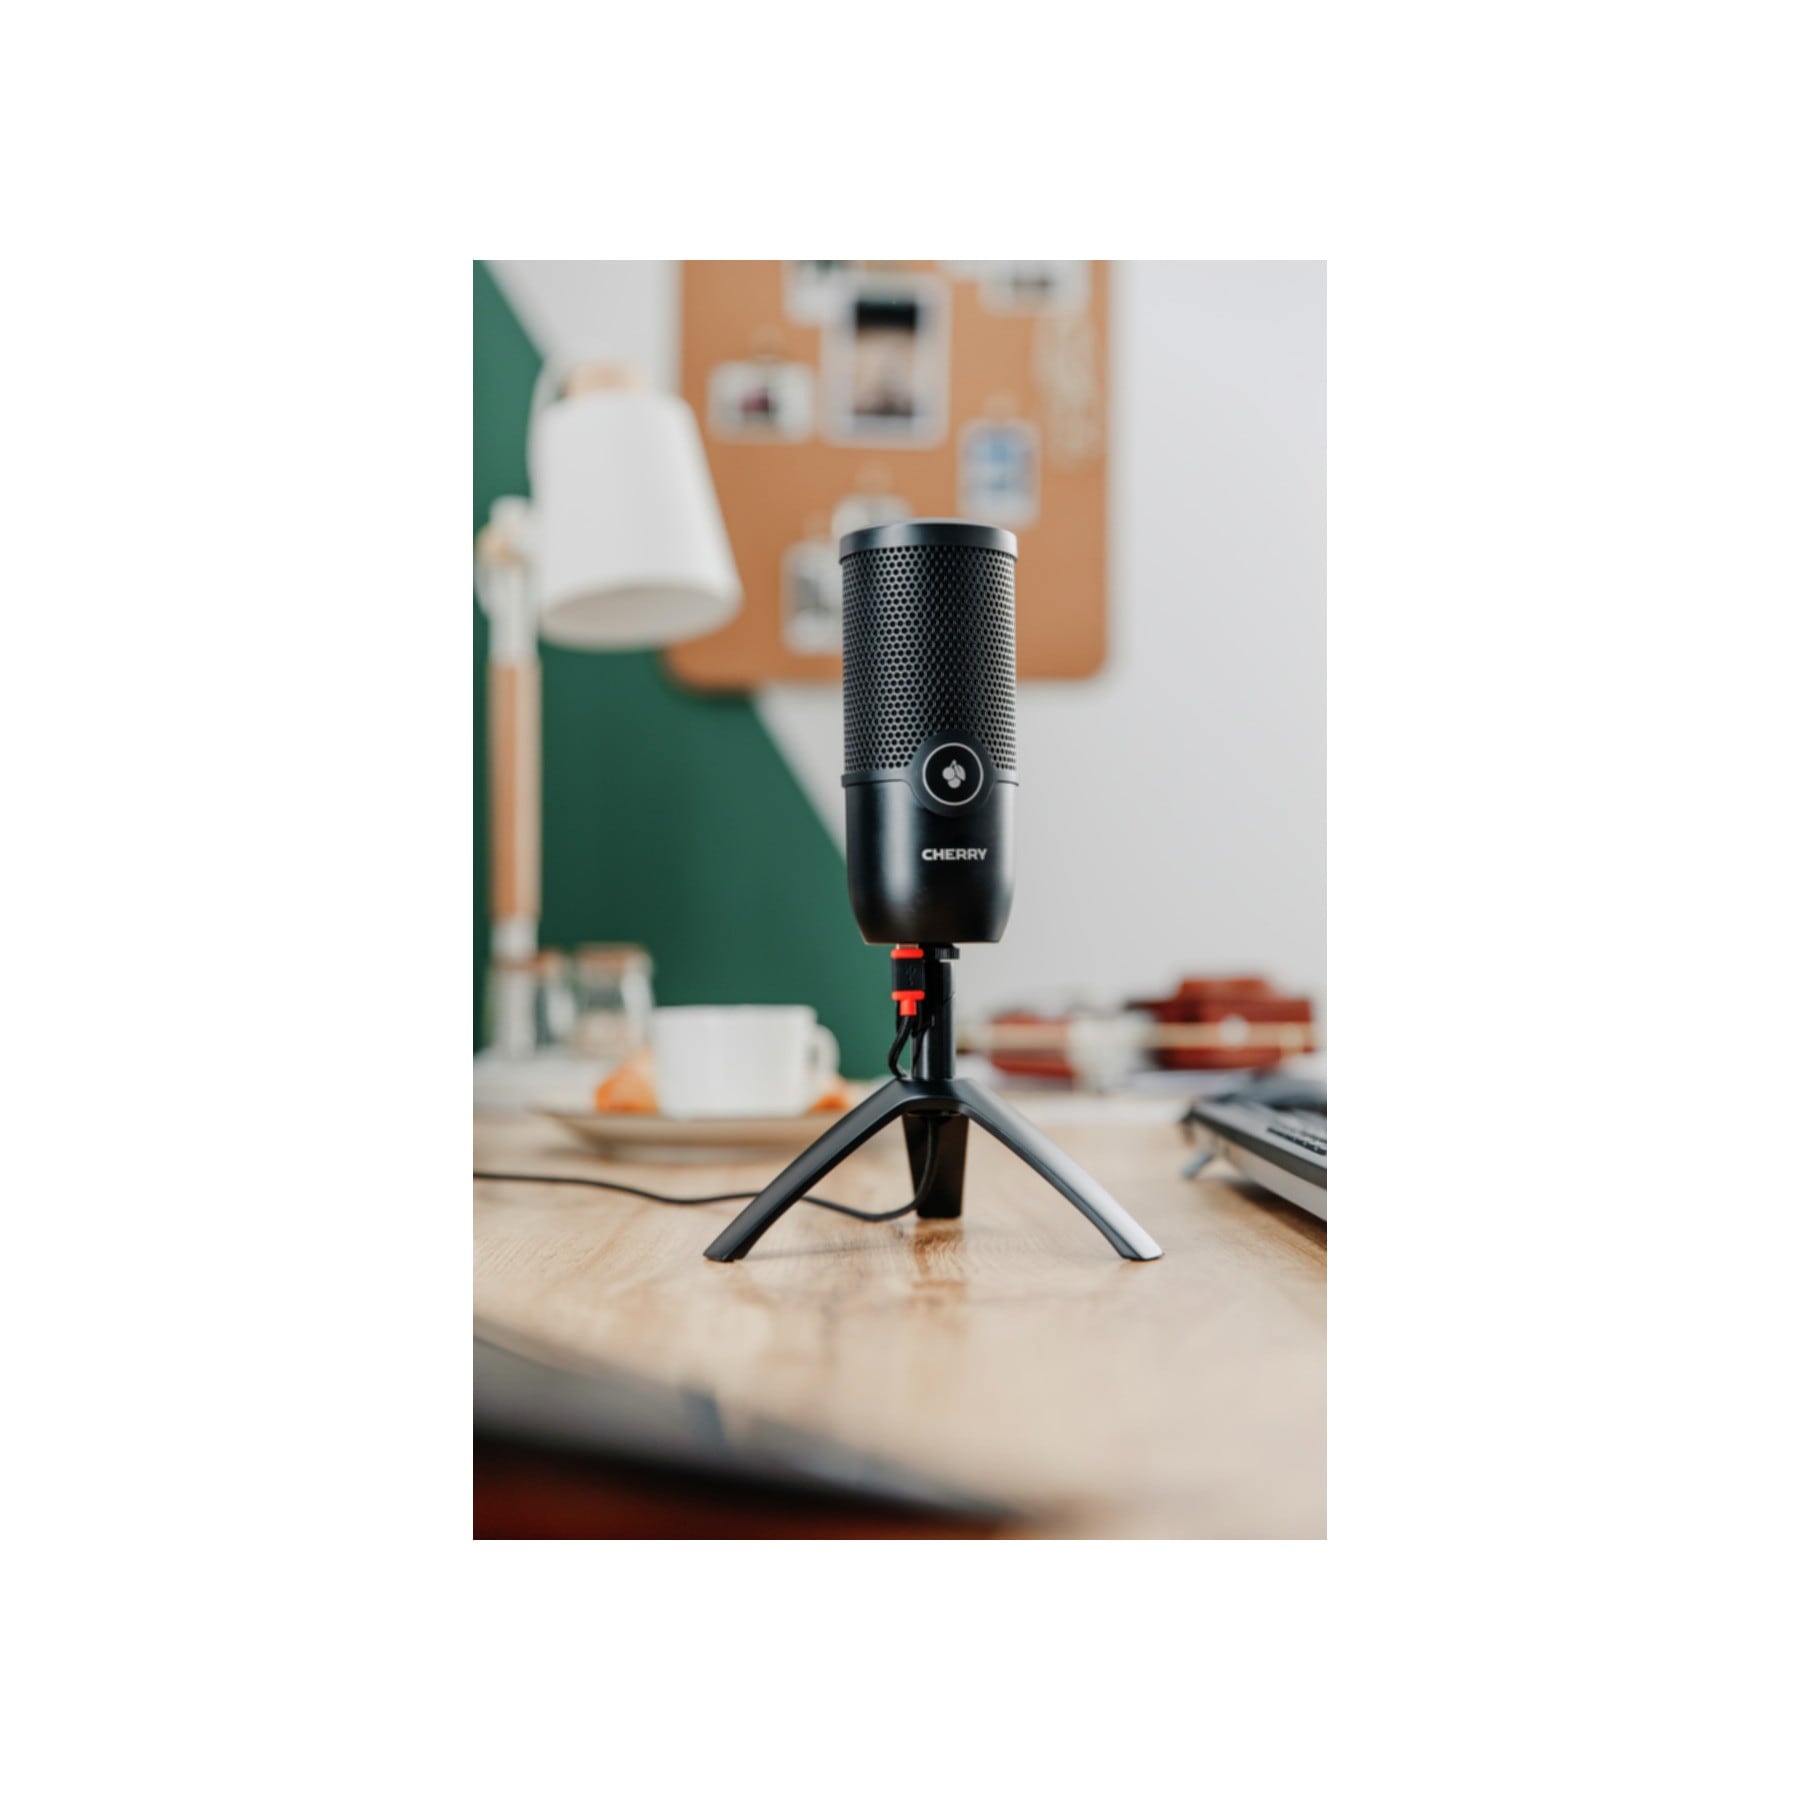 Cherry Mikrofon »UM 3.0«